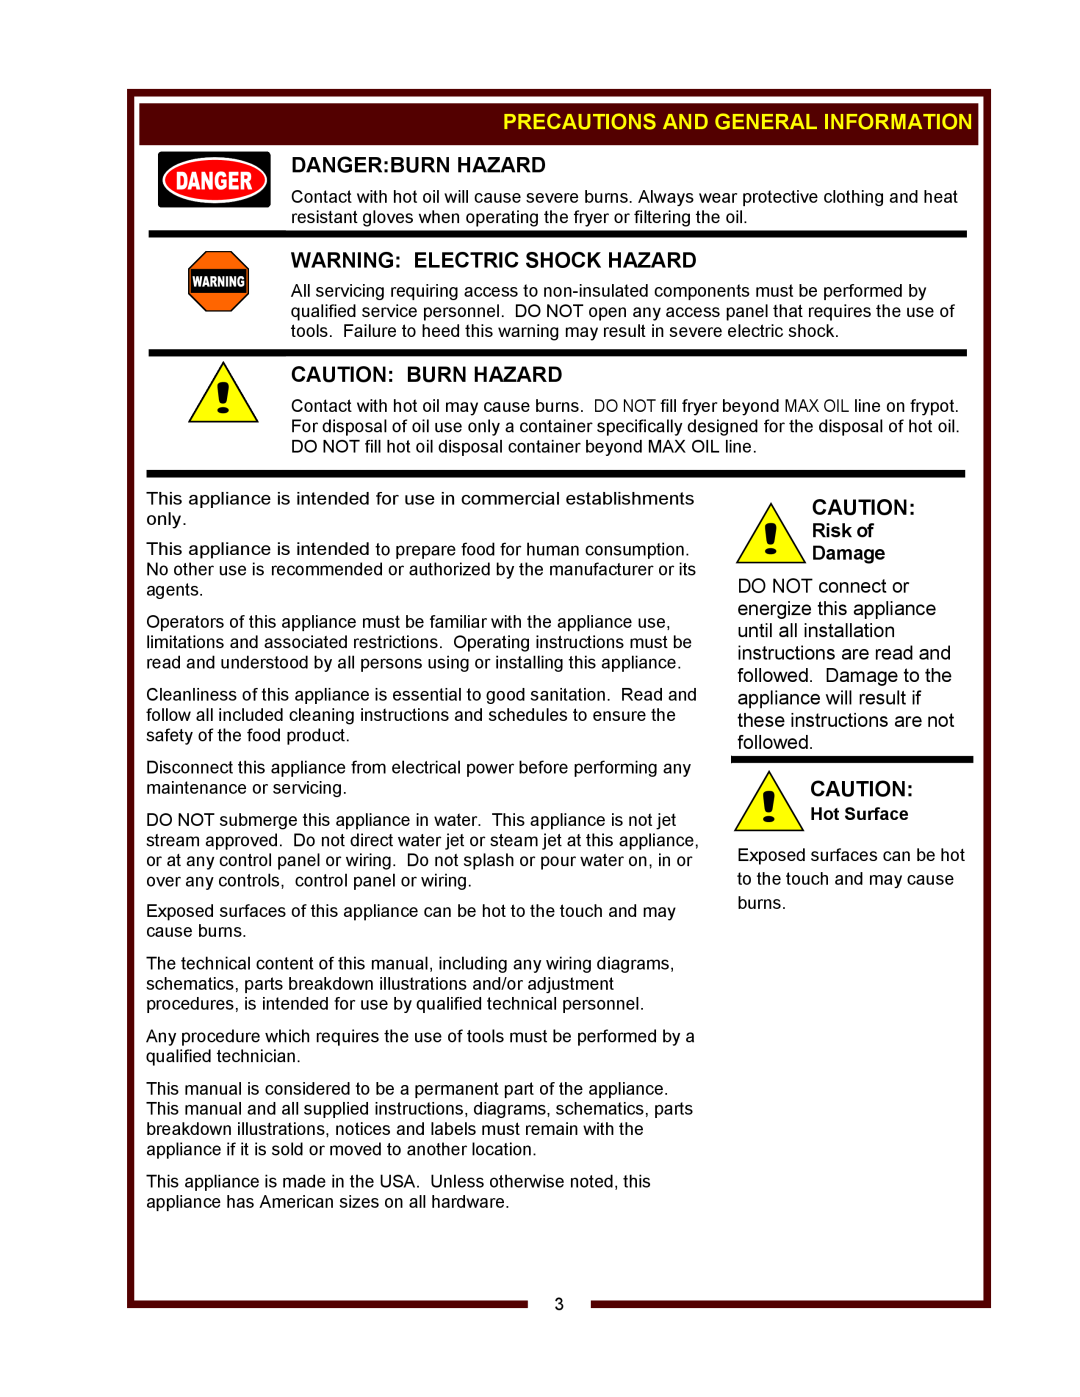 Wells F-886 Precautions And General Information, Dangerburn Hazard, Warning Electric Shock Hazard, Caution Burn Hazard 